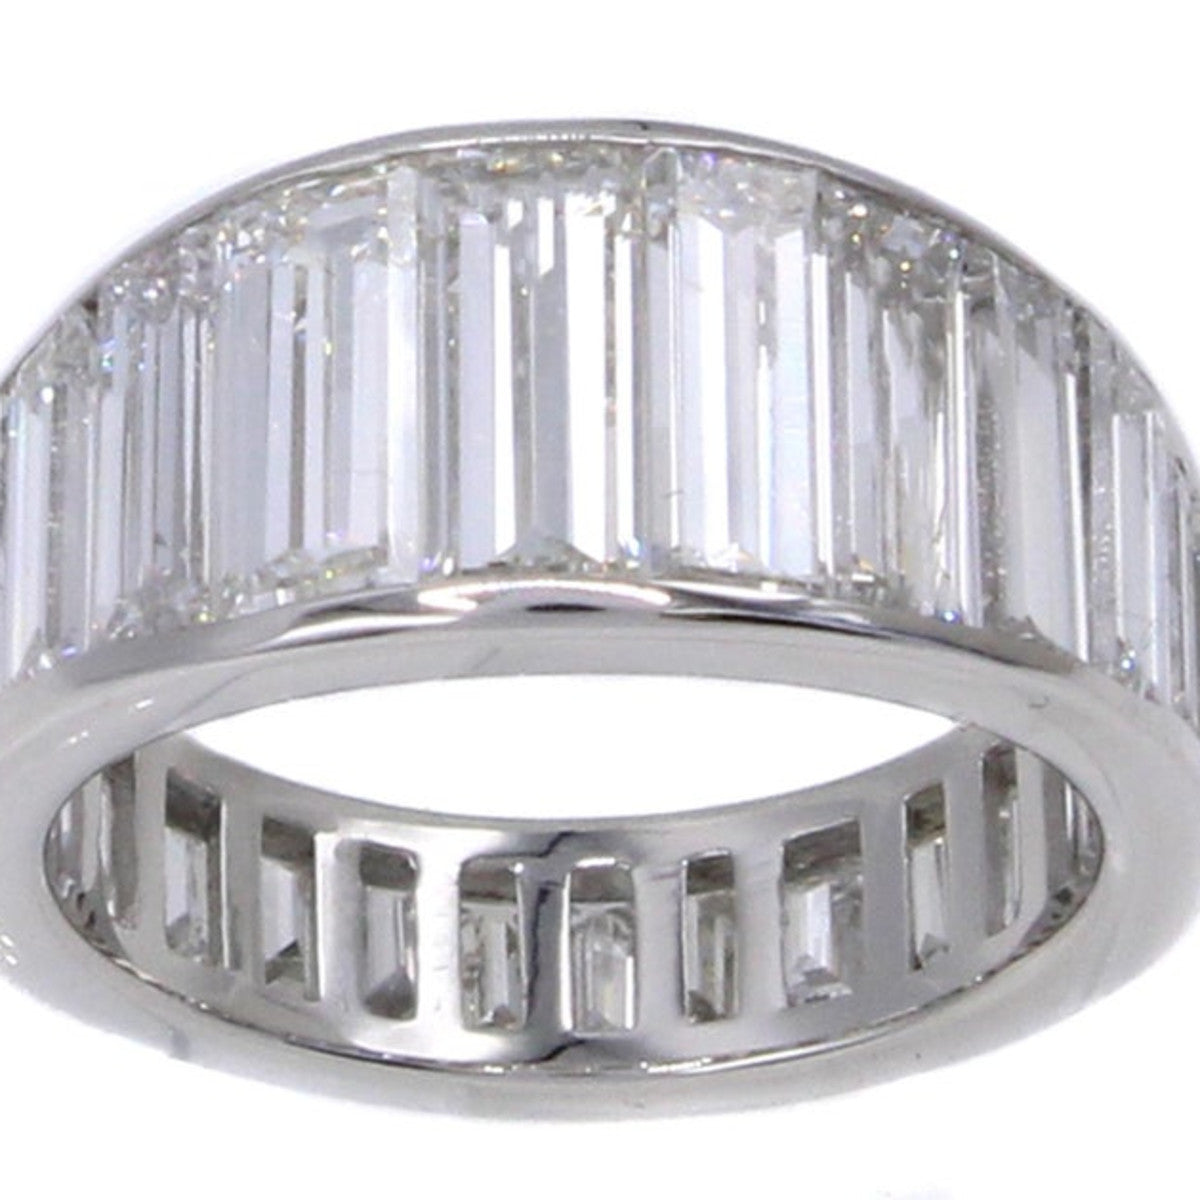 Post-1980s Platinum Diamond Eternity Ring close-up details